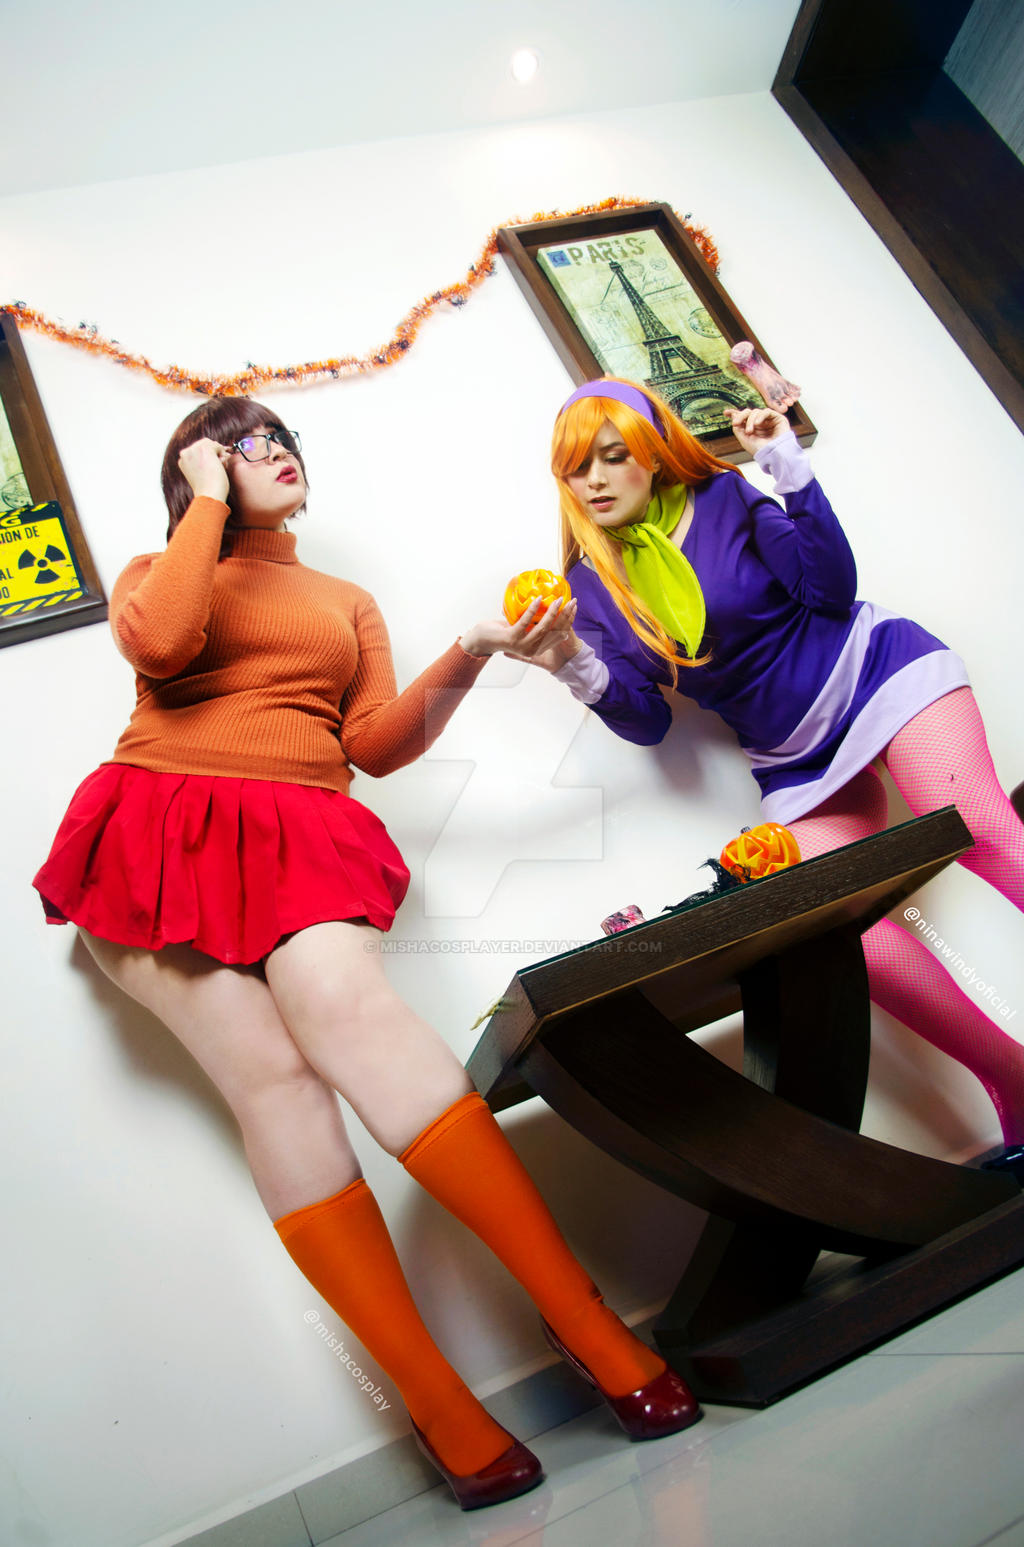 The twins as Velma and Daphne for Halloween #velmaanddaphne #halloween